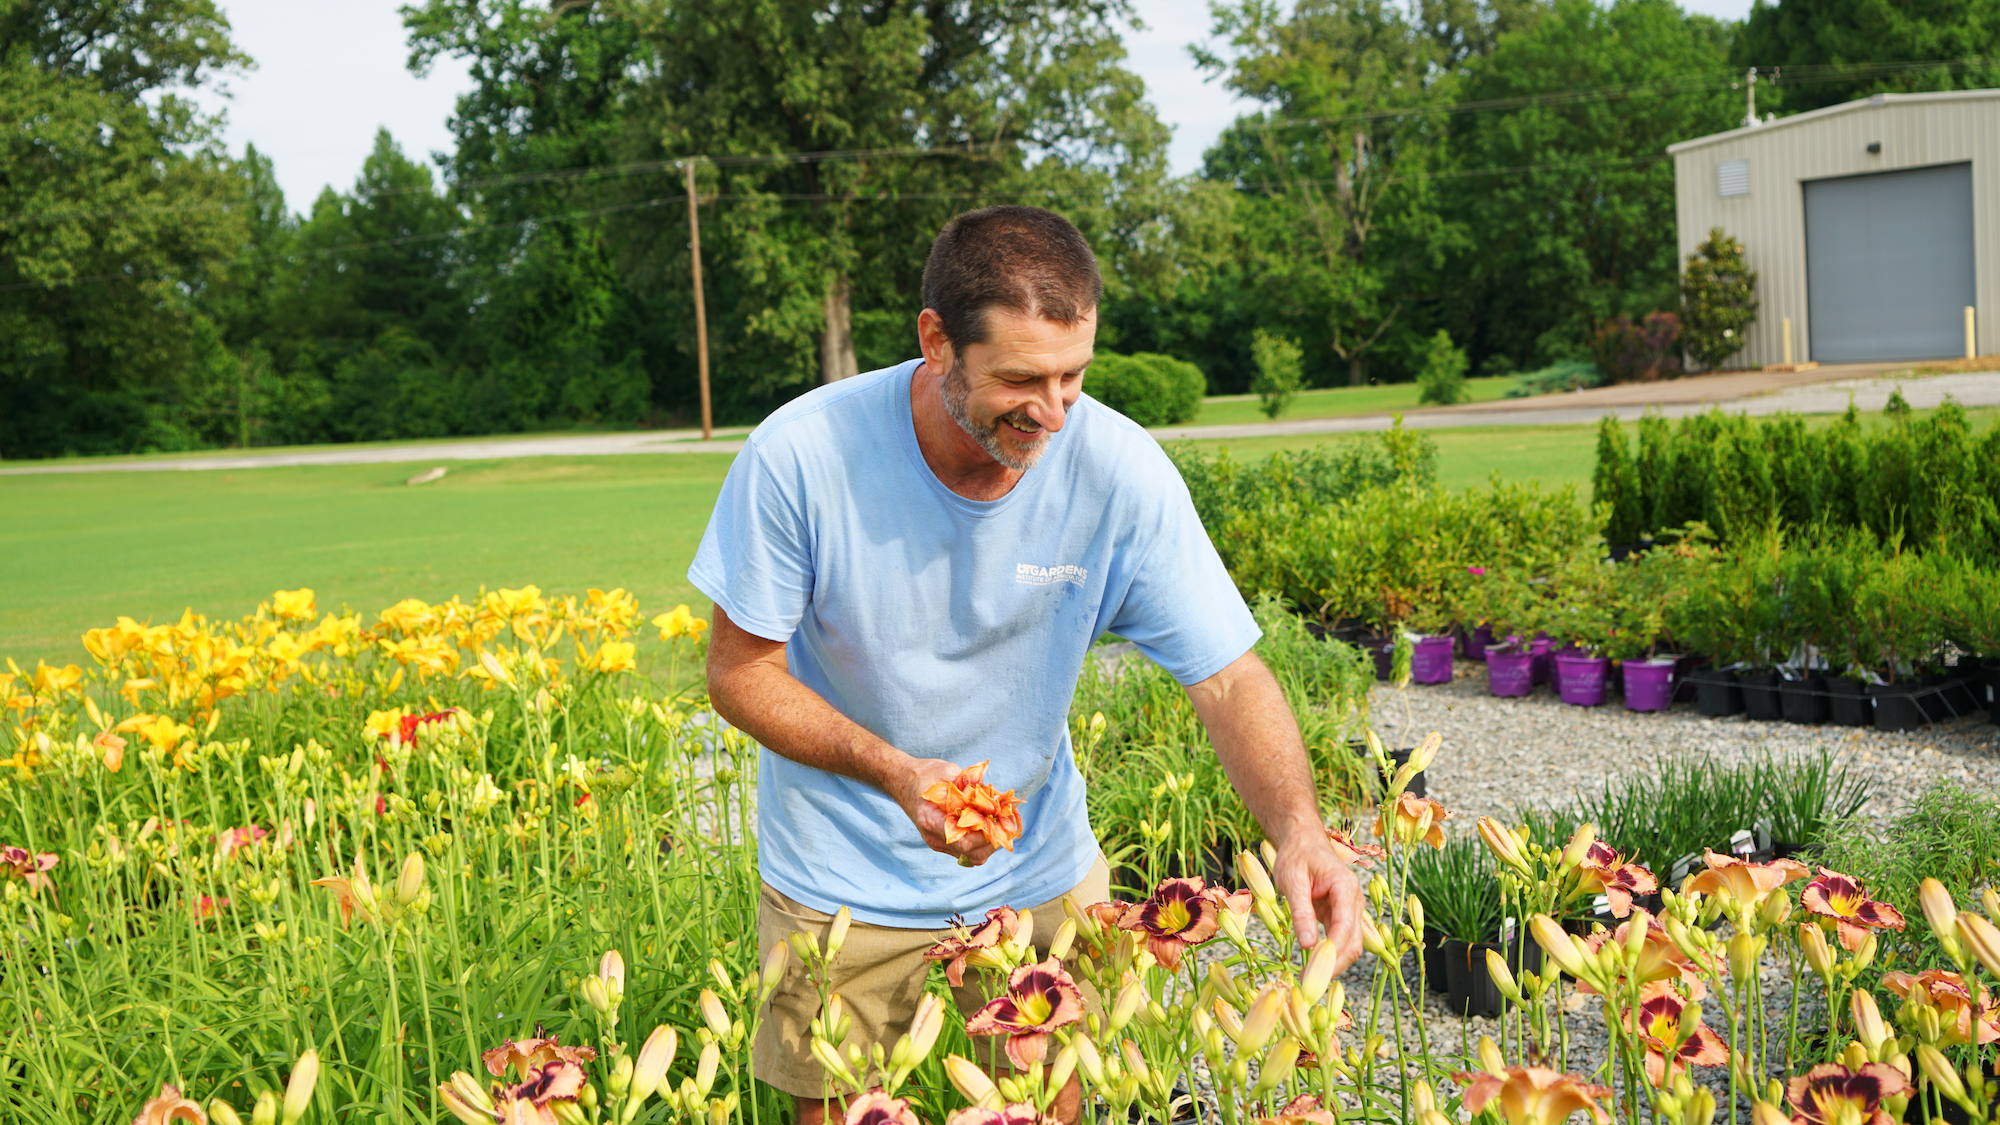 A smiling man picks yellow and orange daylily flowers